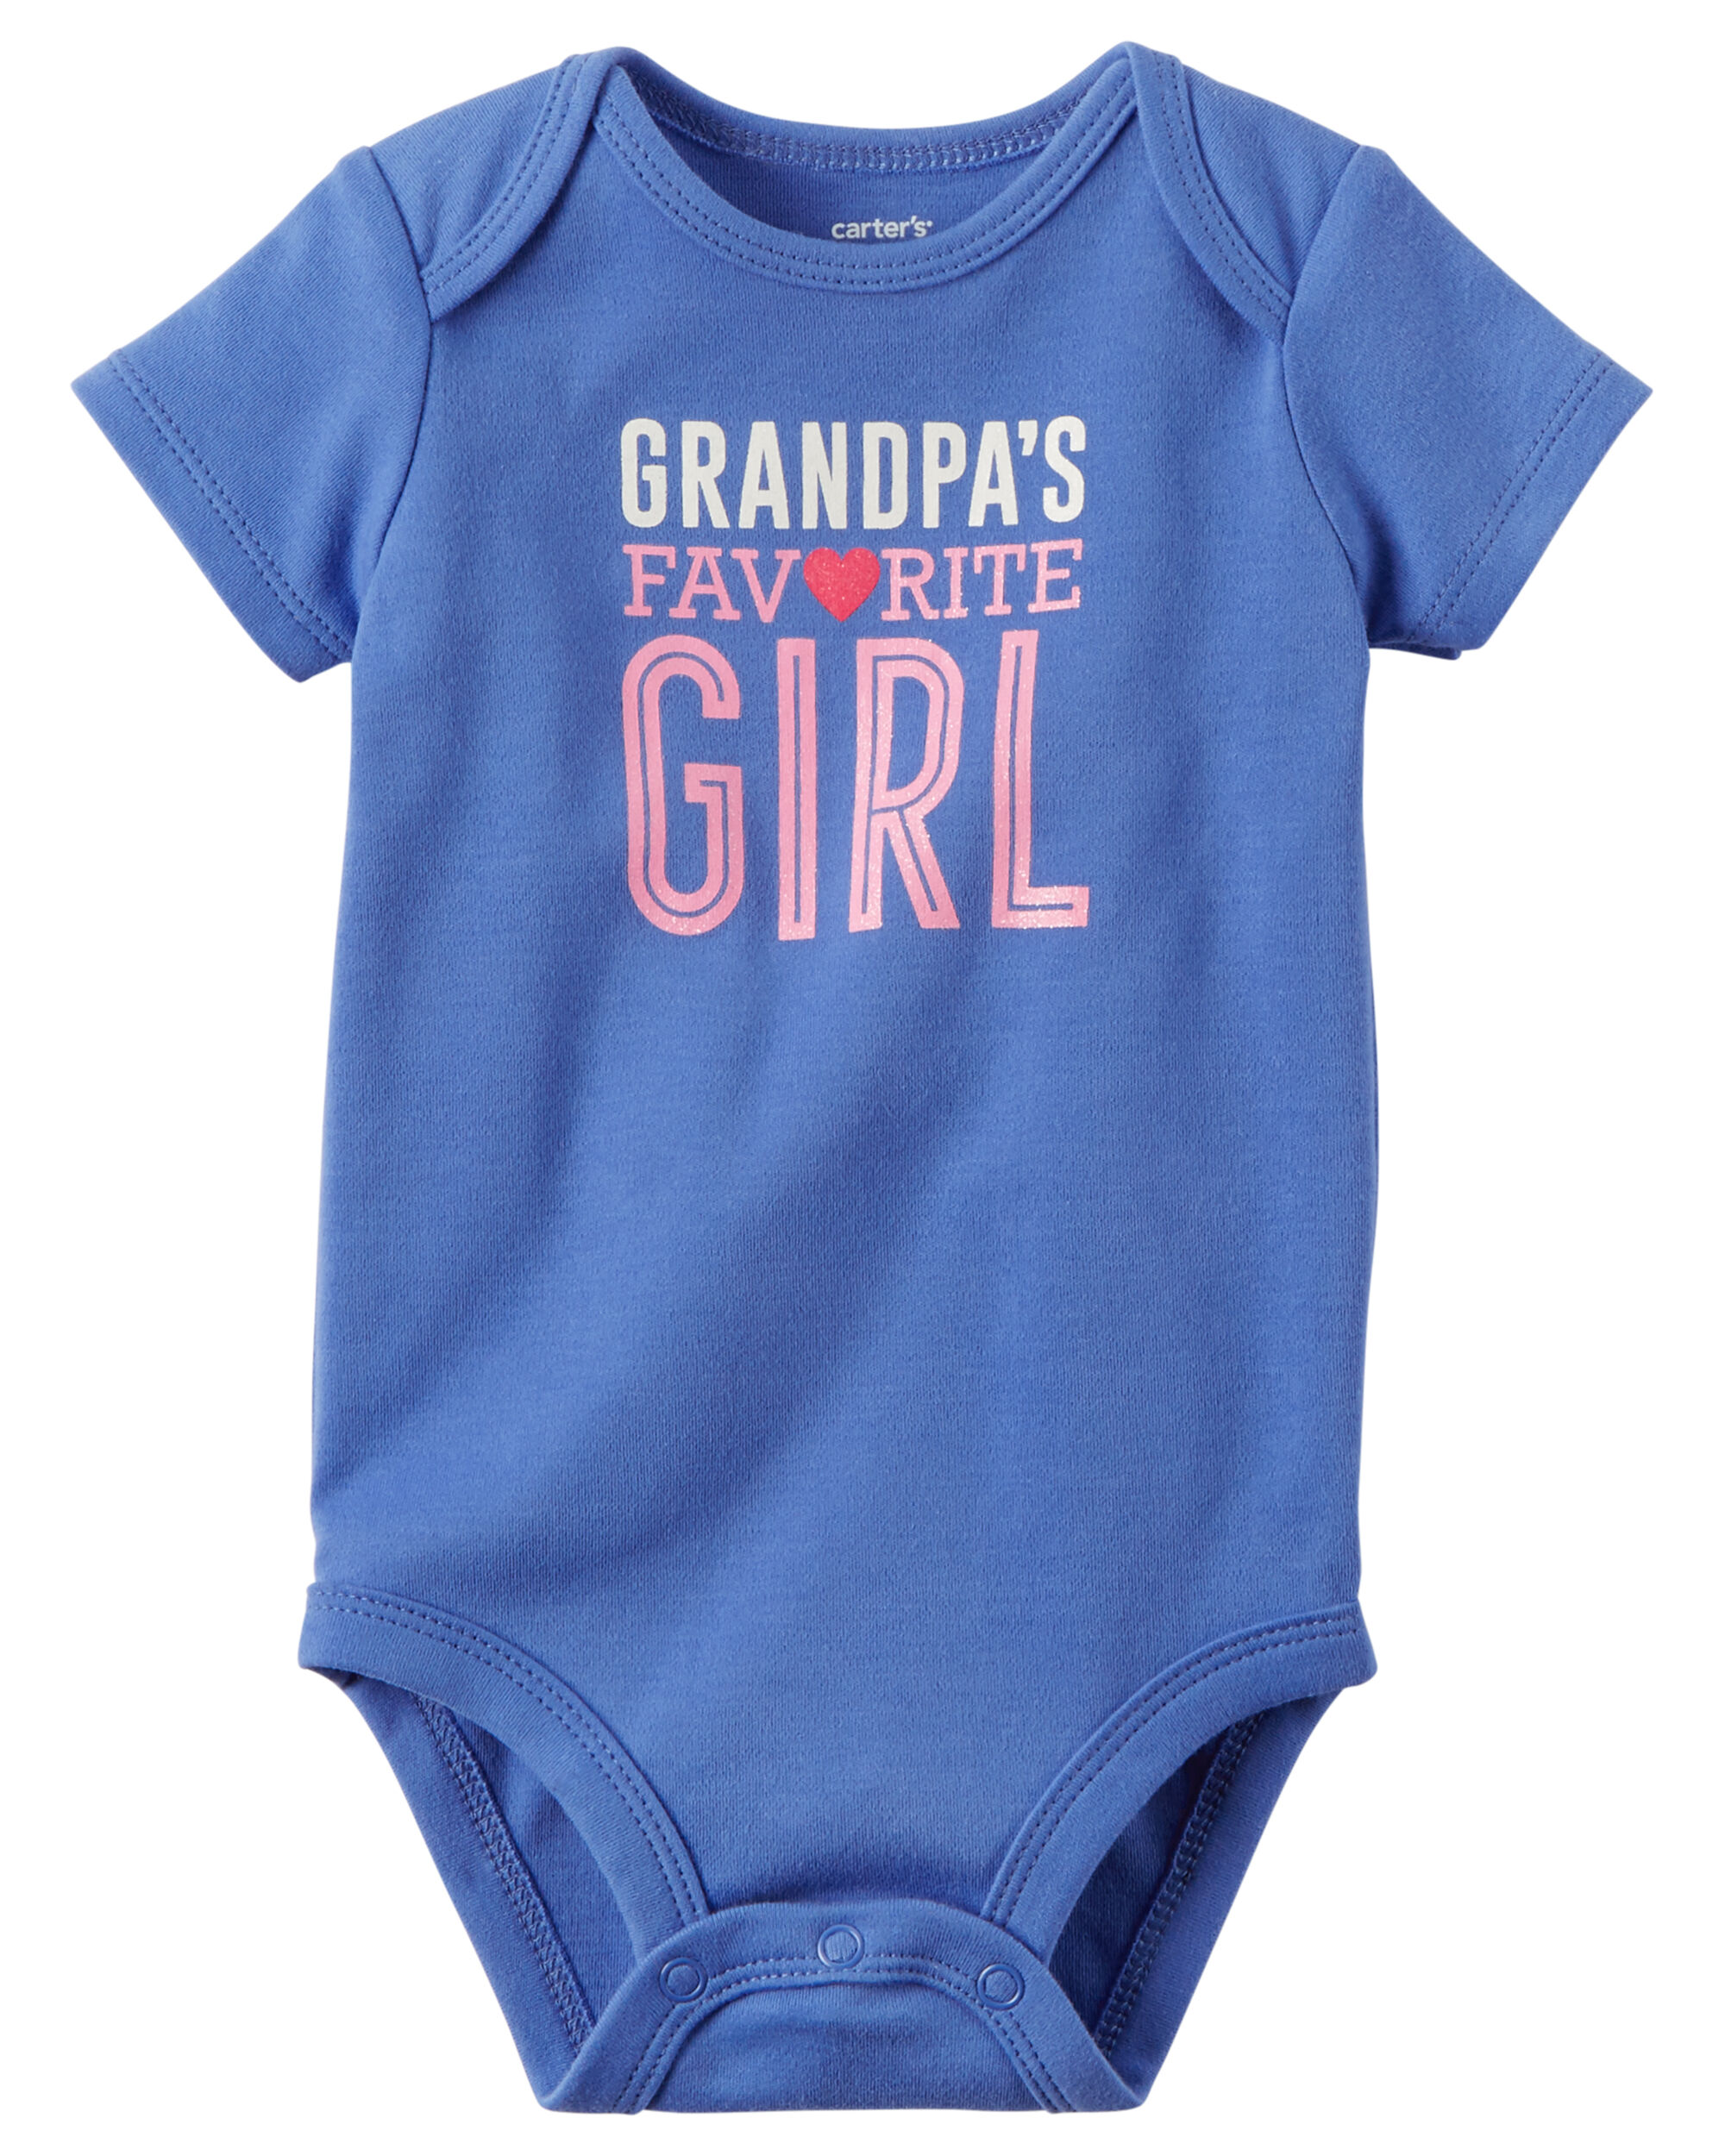 grandpa onesies for baby girl